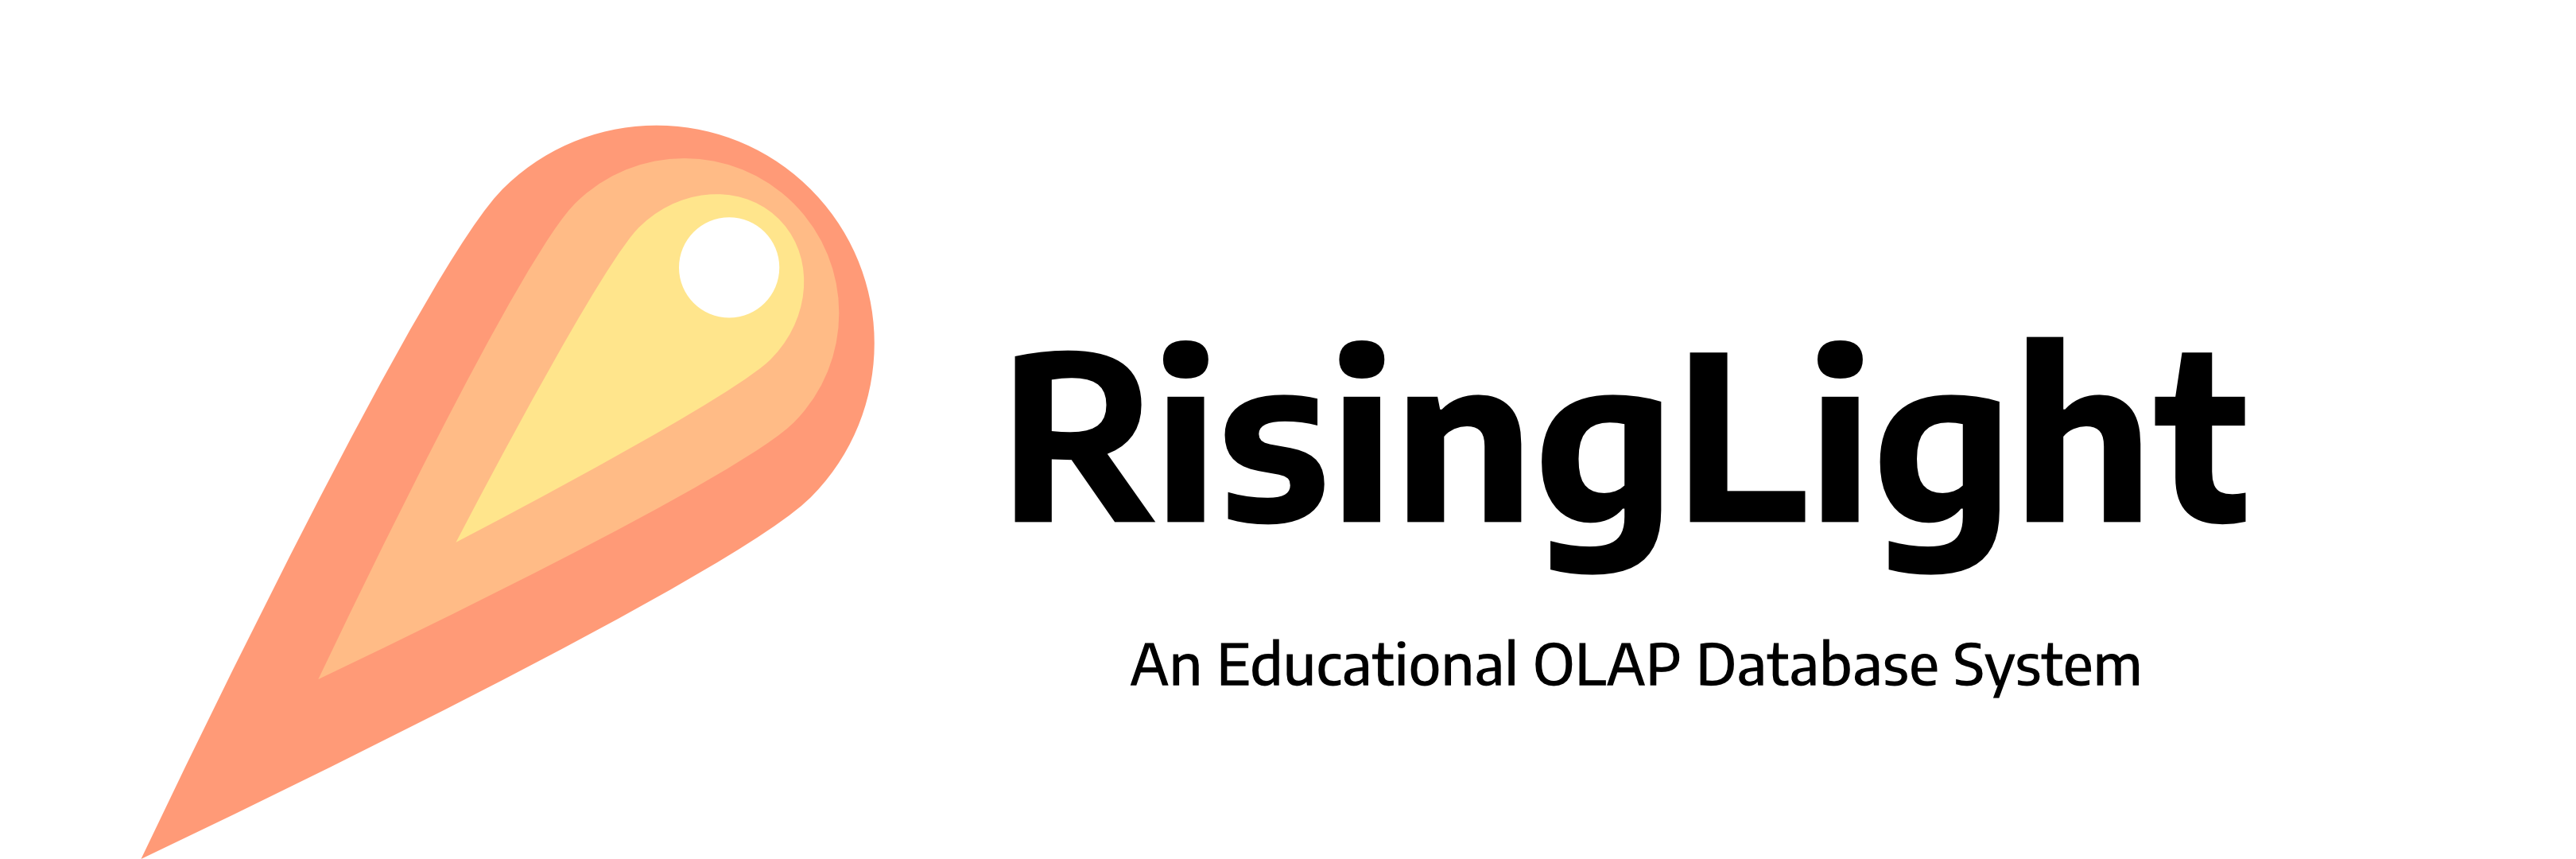 risinglightdb-banner.png